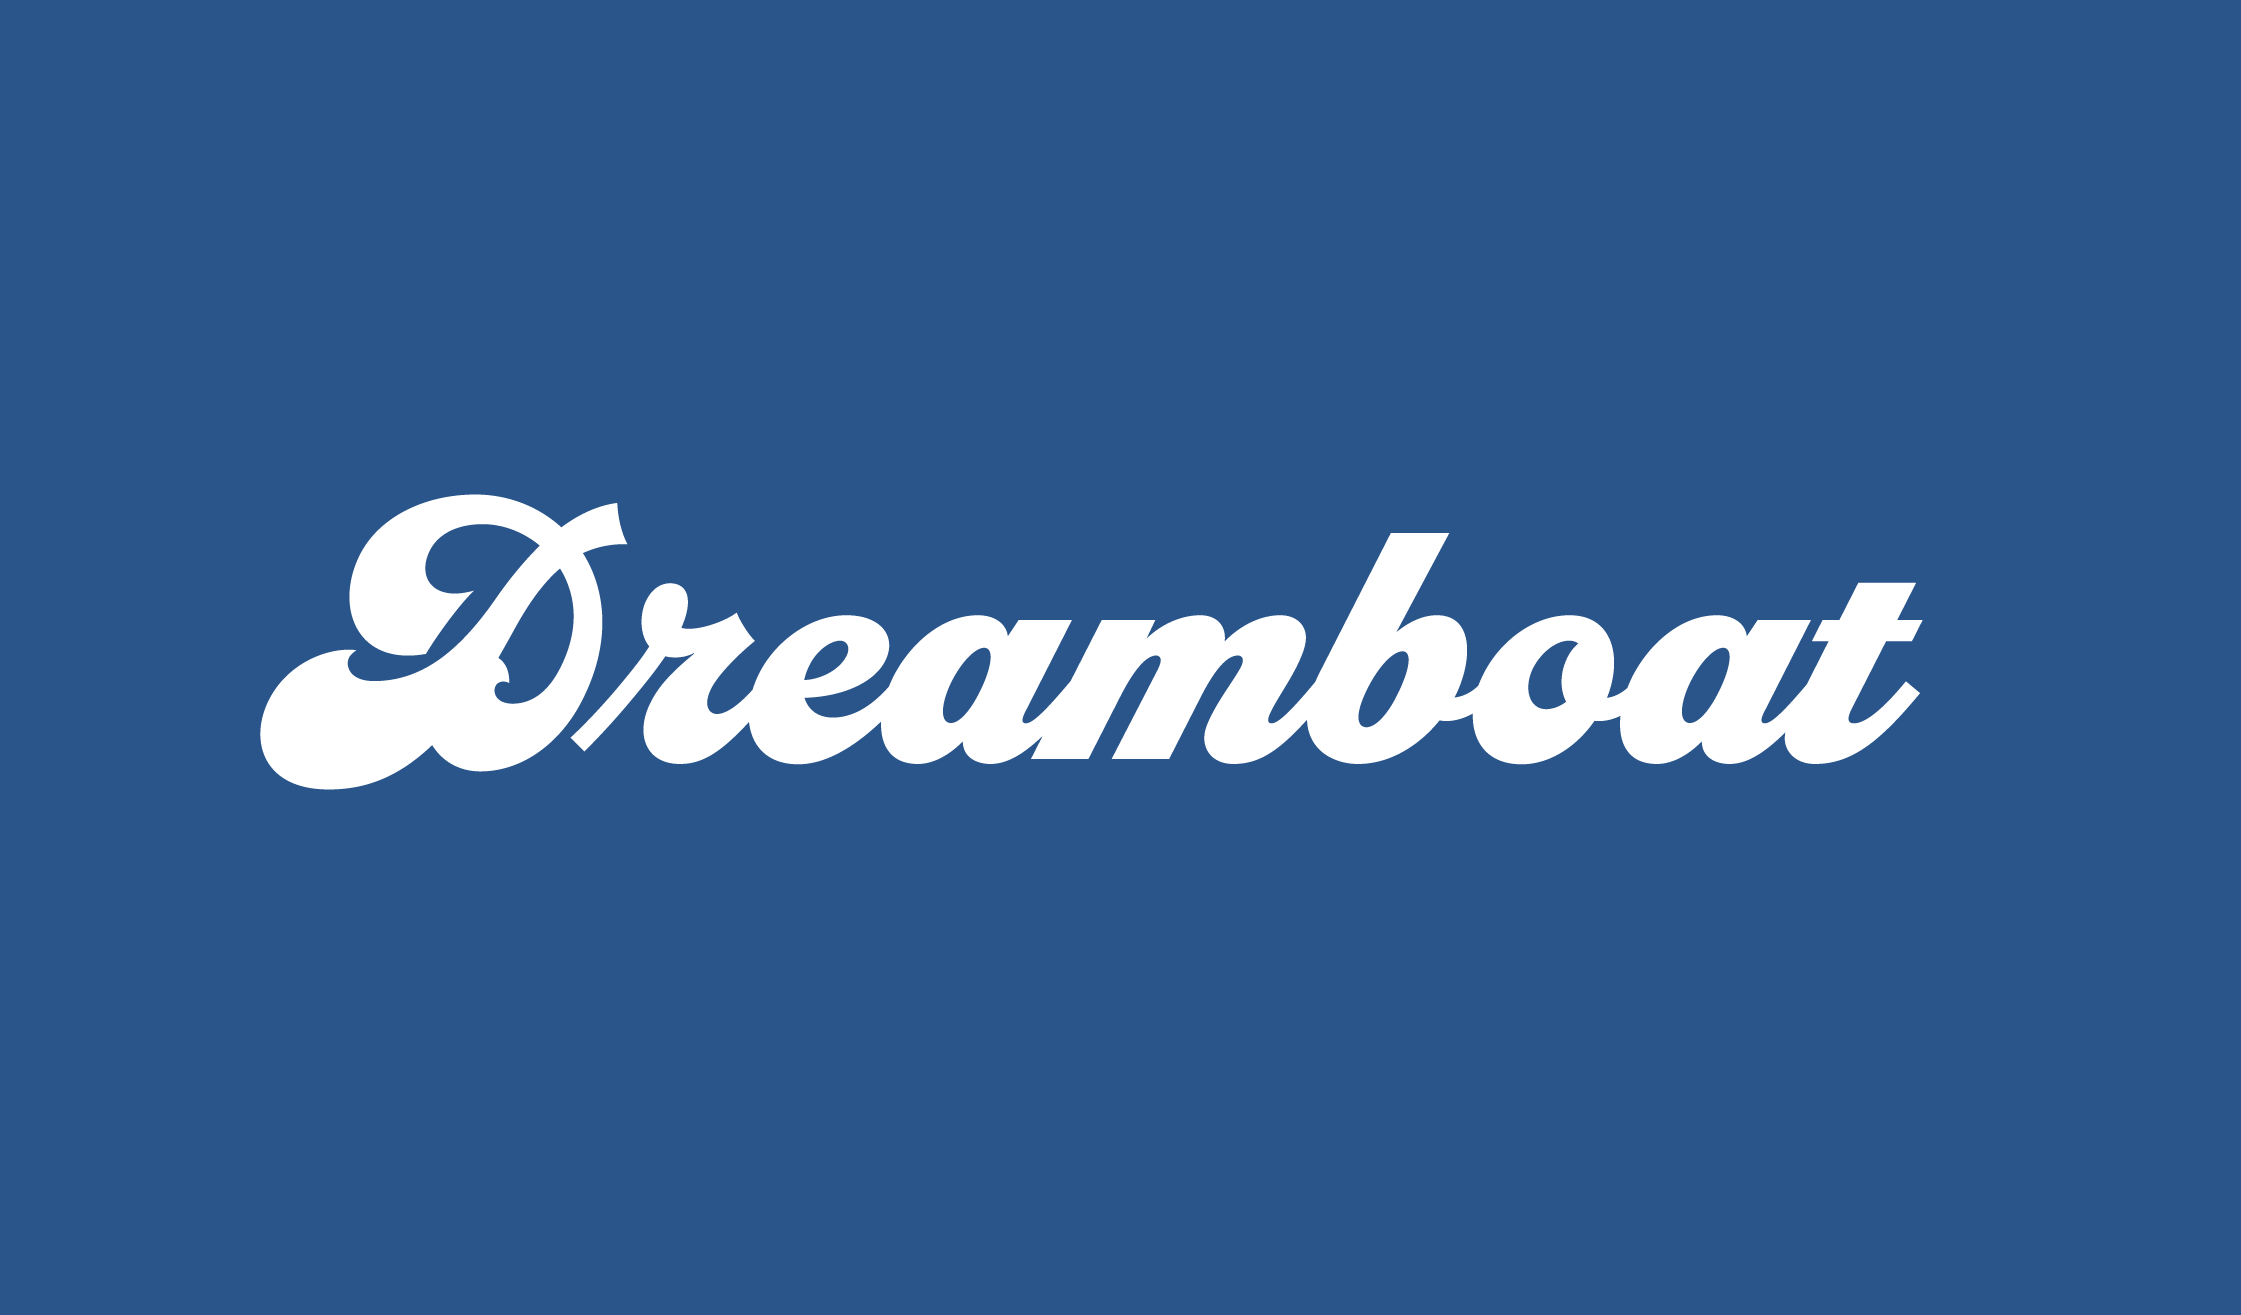 Simonson Dreamboat Graphics Web01